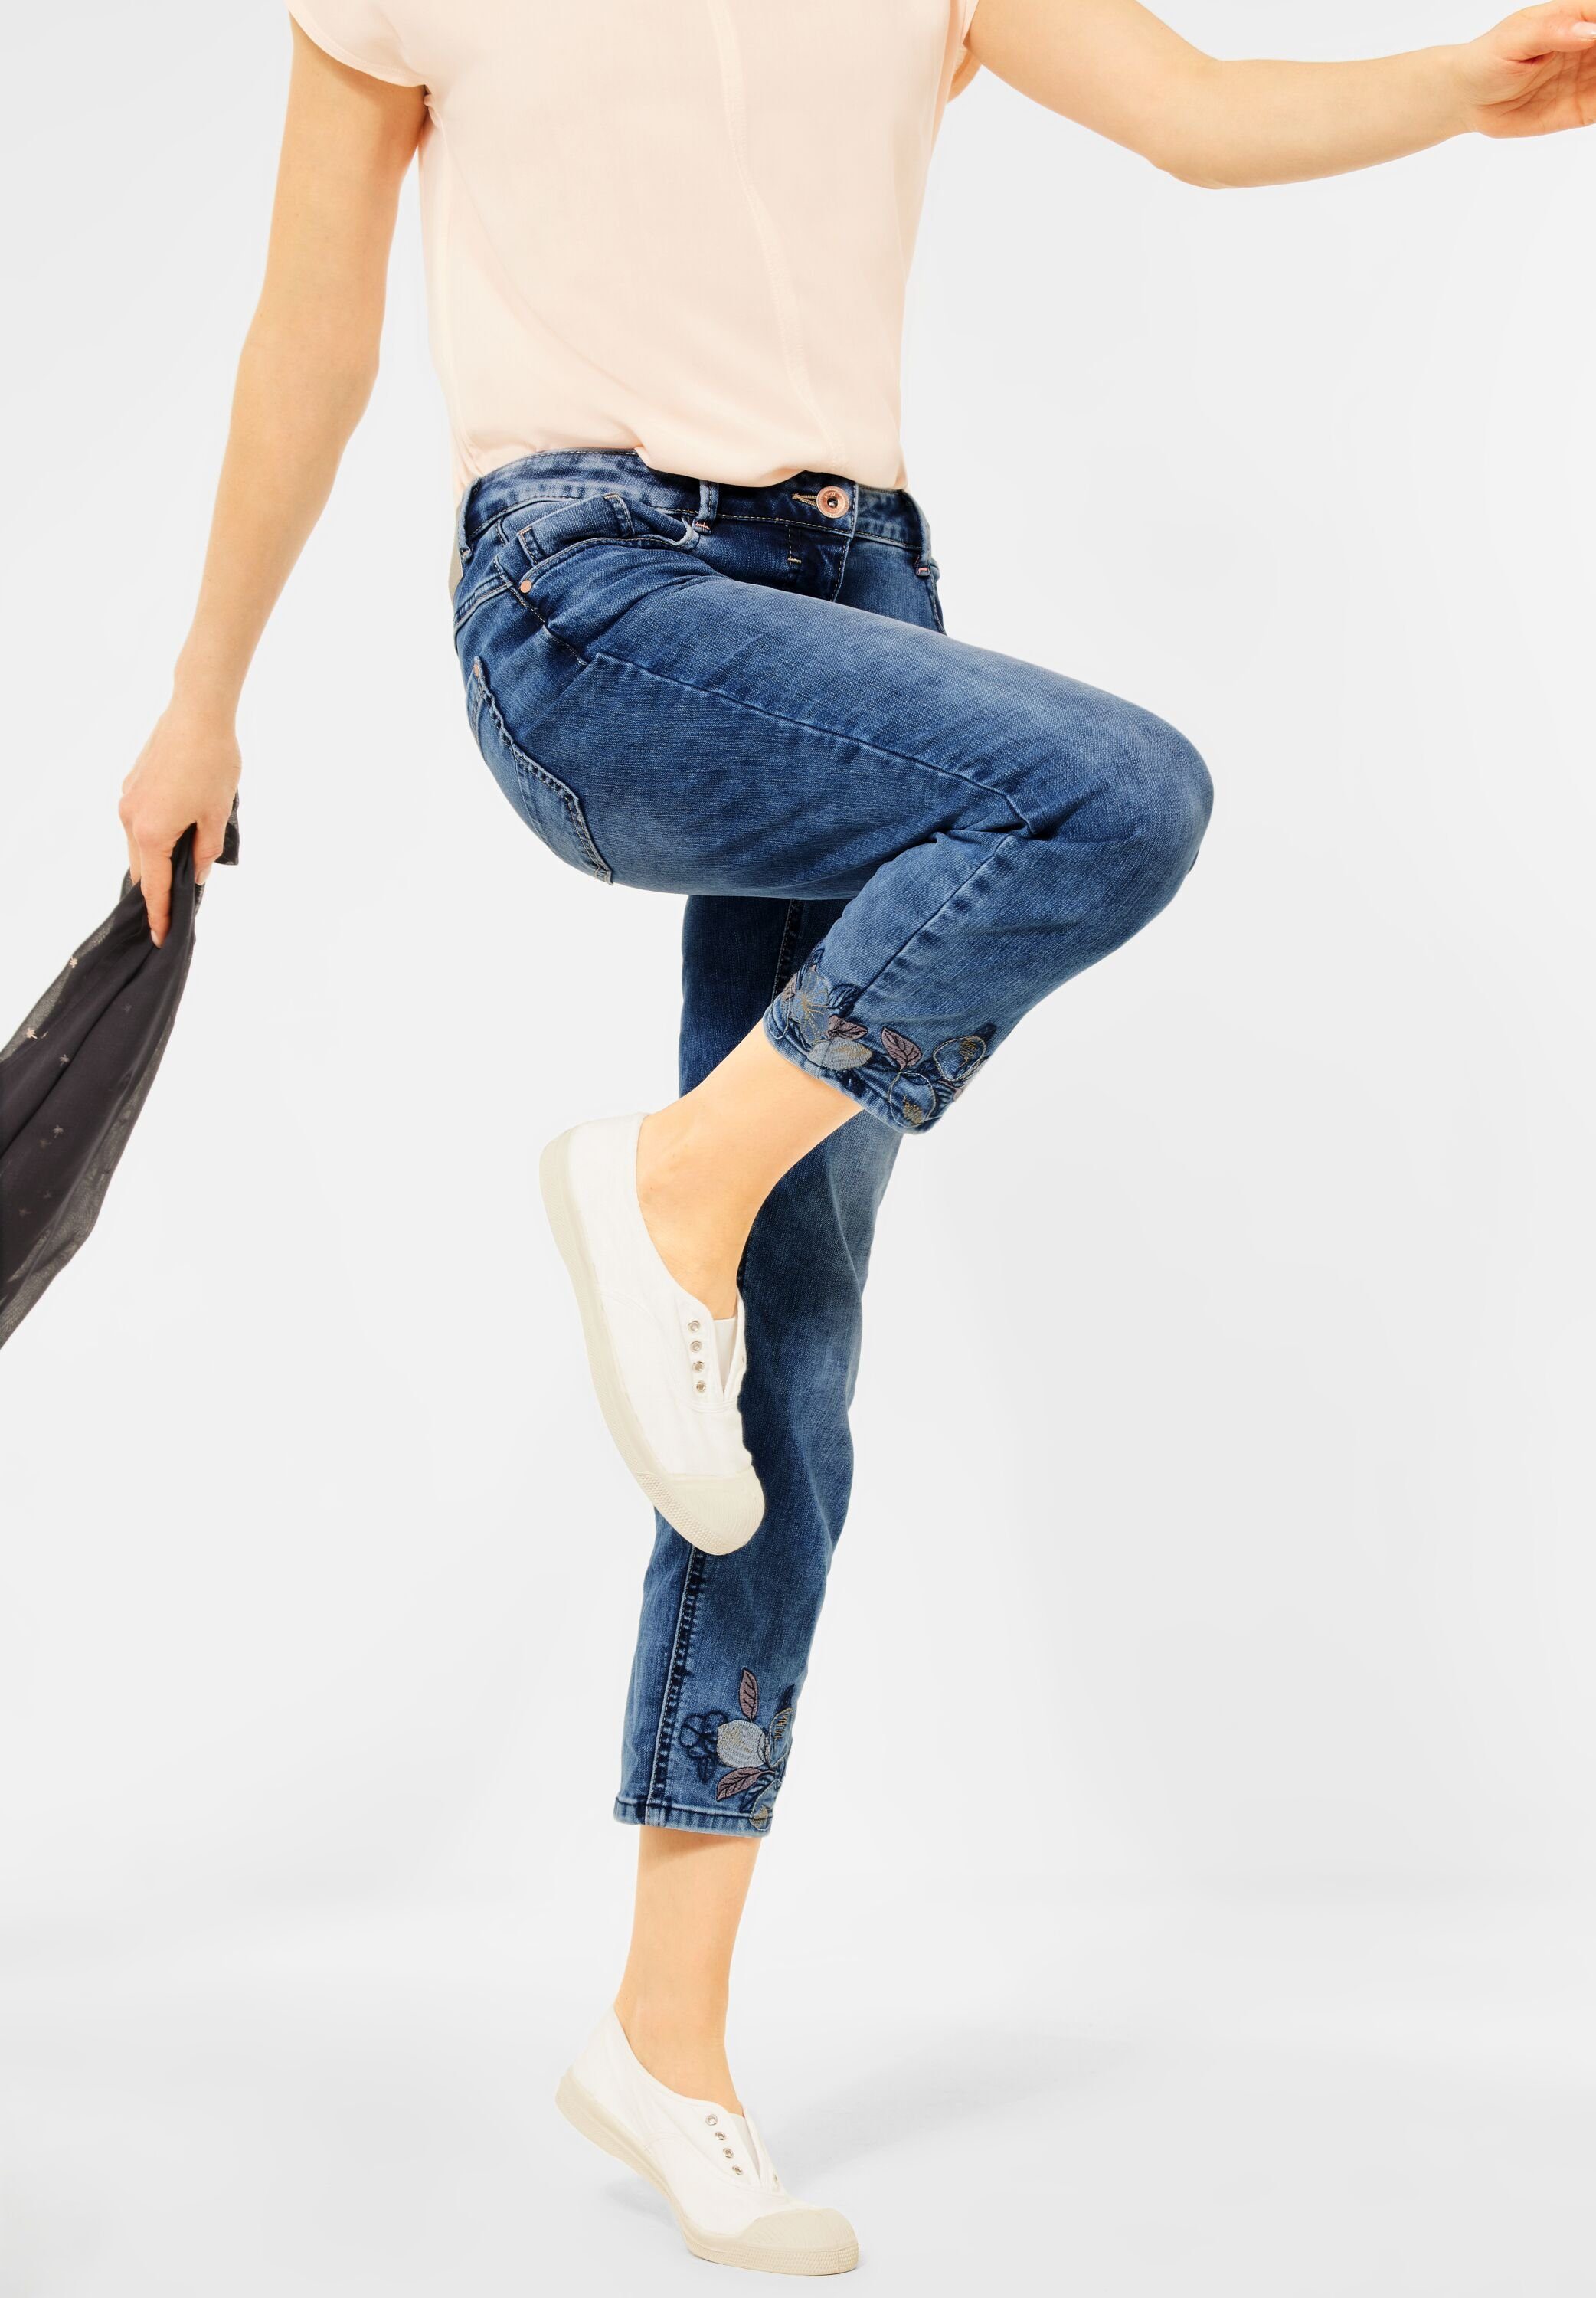 توضيح صفر بلى على نطاق واسع تناقض الإملاء 7 8 jeans cecil -  internetcapquangthaibinh.com